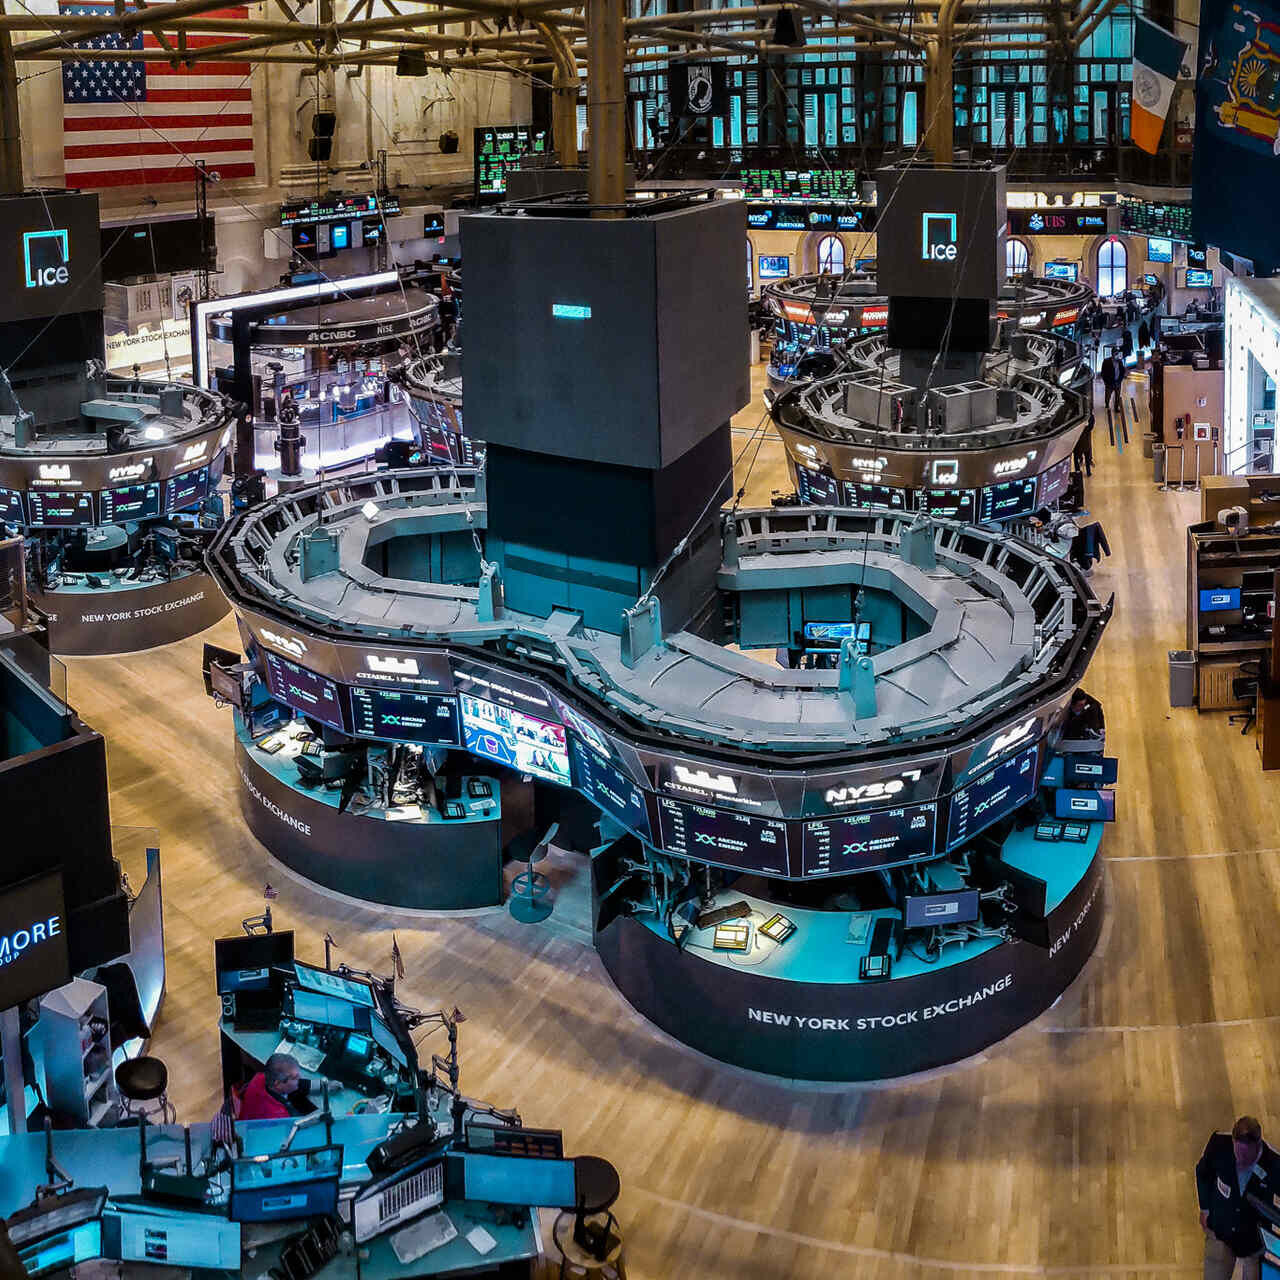 ETF: 유명한 월스트리트를 기반으로 하고 1817년에 설립된 뉴욕 증권 거래소(약어: New York Stock Exchange 또는 NYSE)의 거래 현장